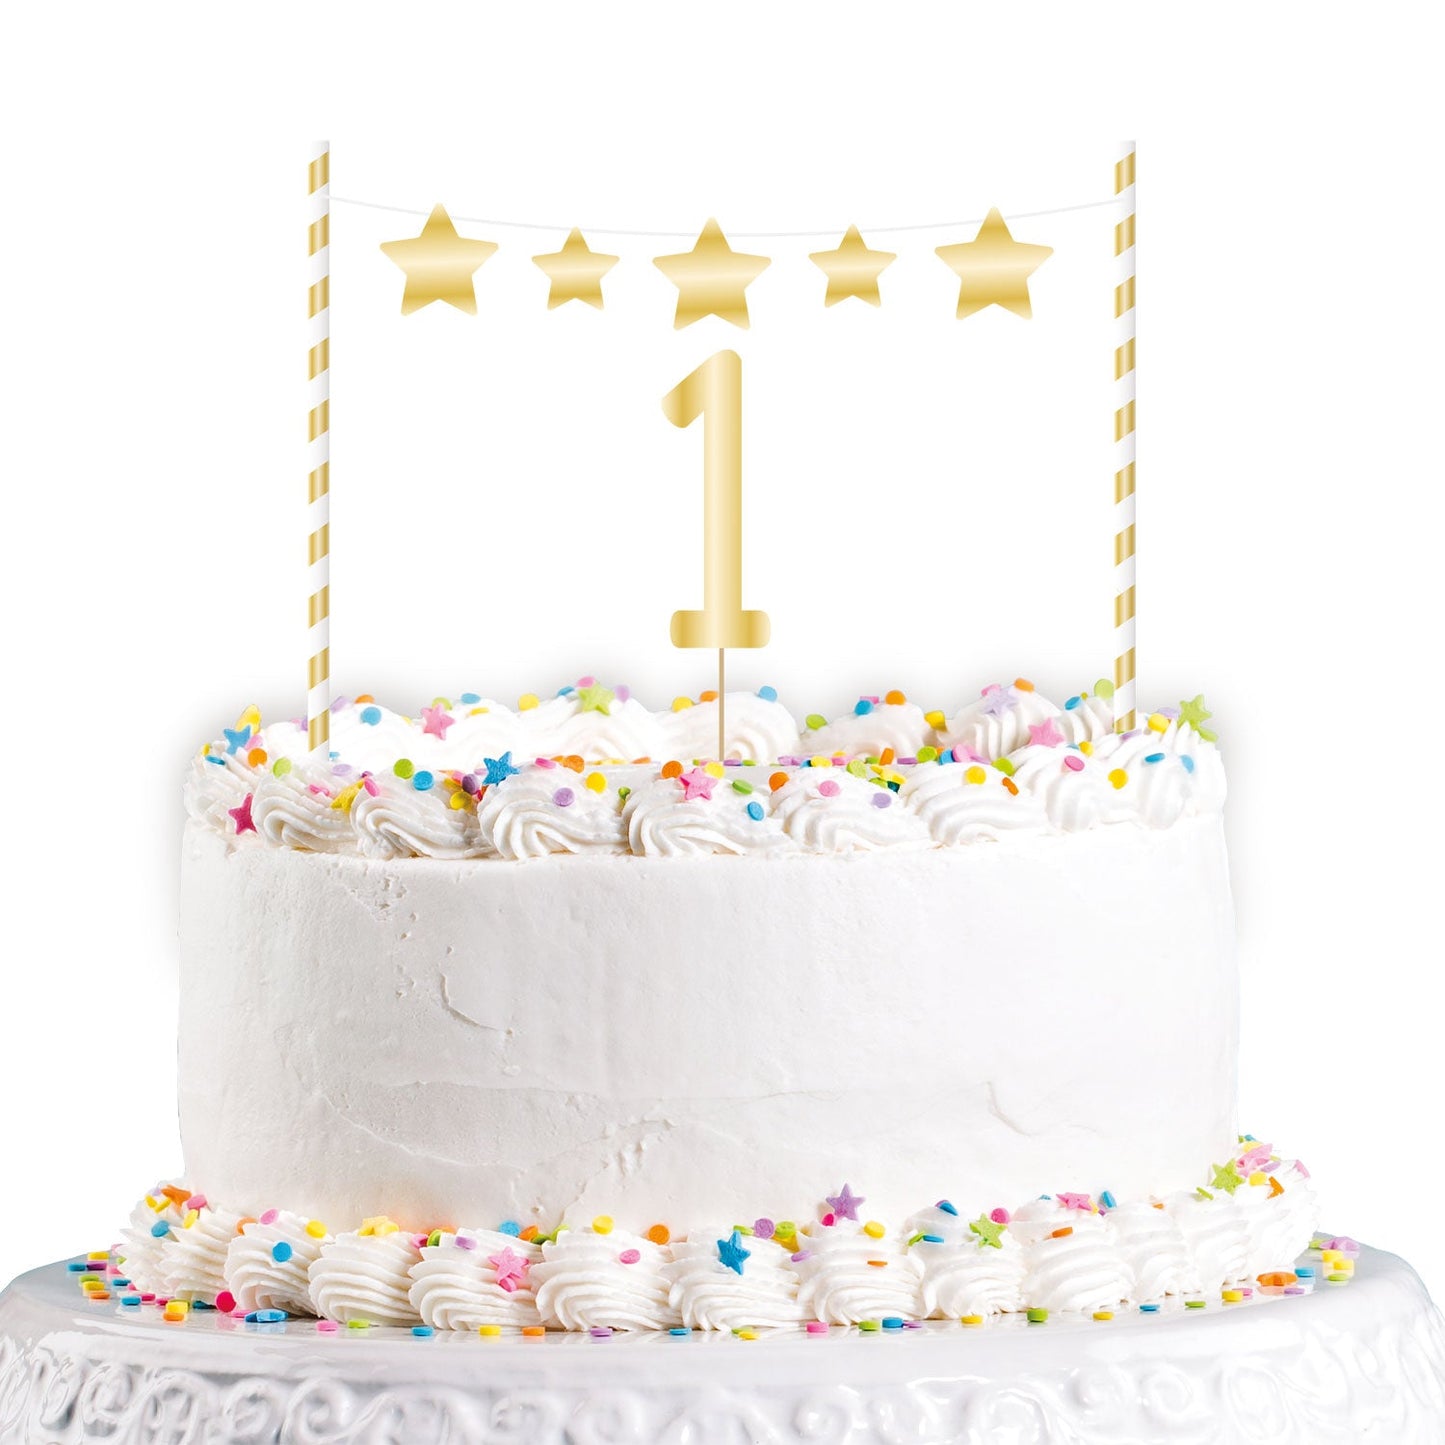 1st Birthday Cake Topper